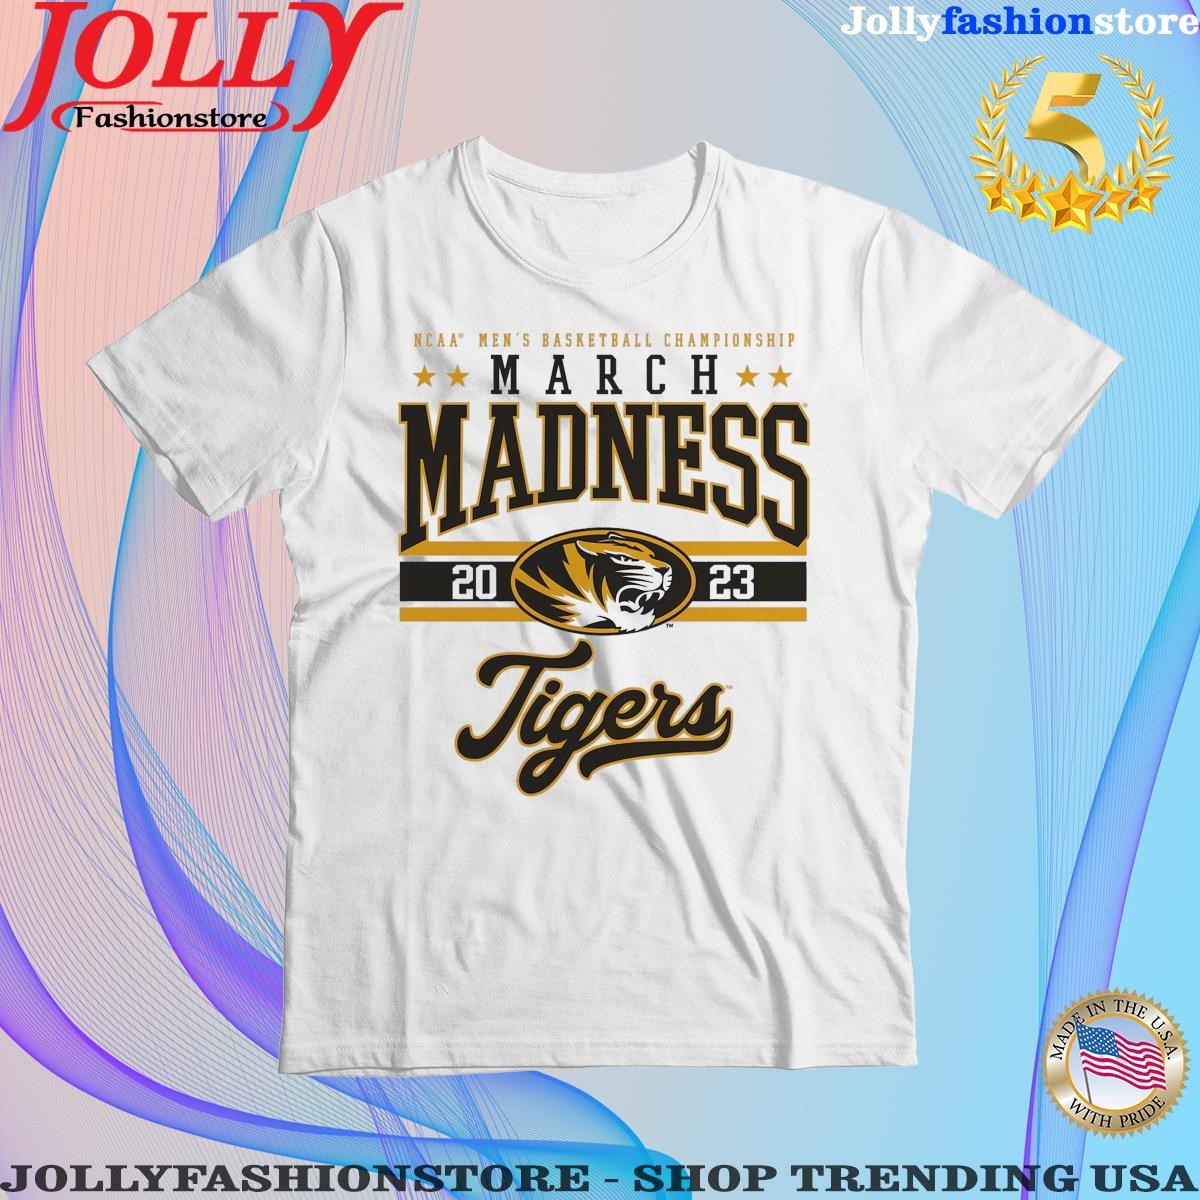 Ncaa men's basketball championship march madness 2023 missourI tigers T-shirt